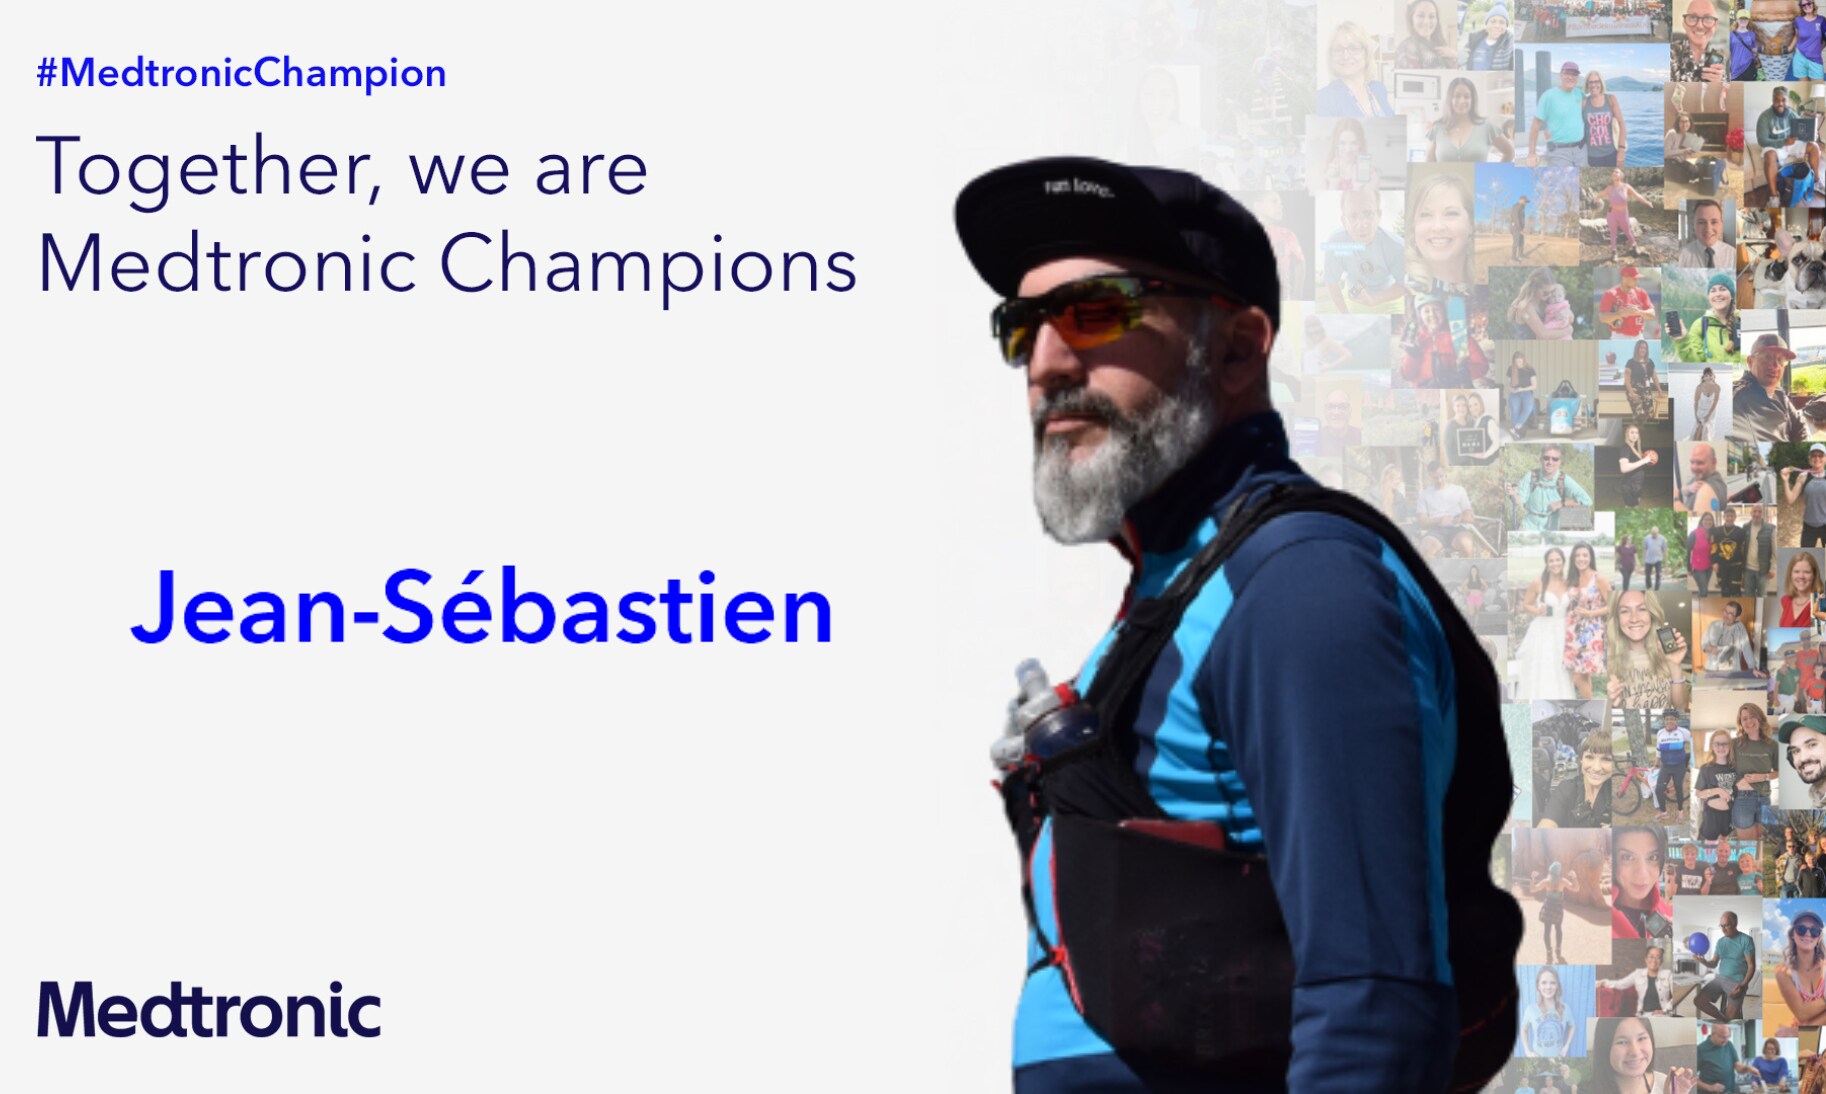 Meet #MedtronicChampion Jean-Sebastien